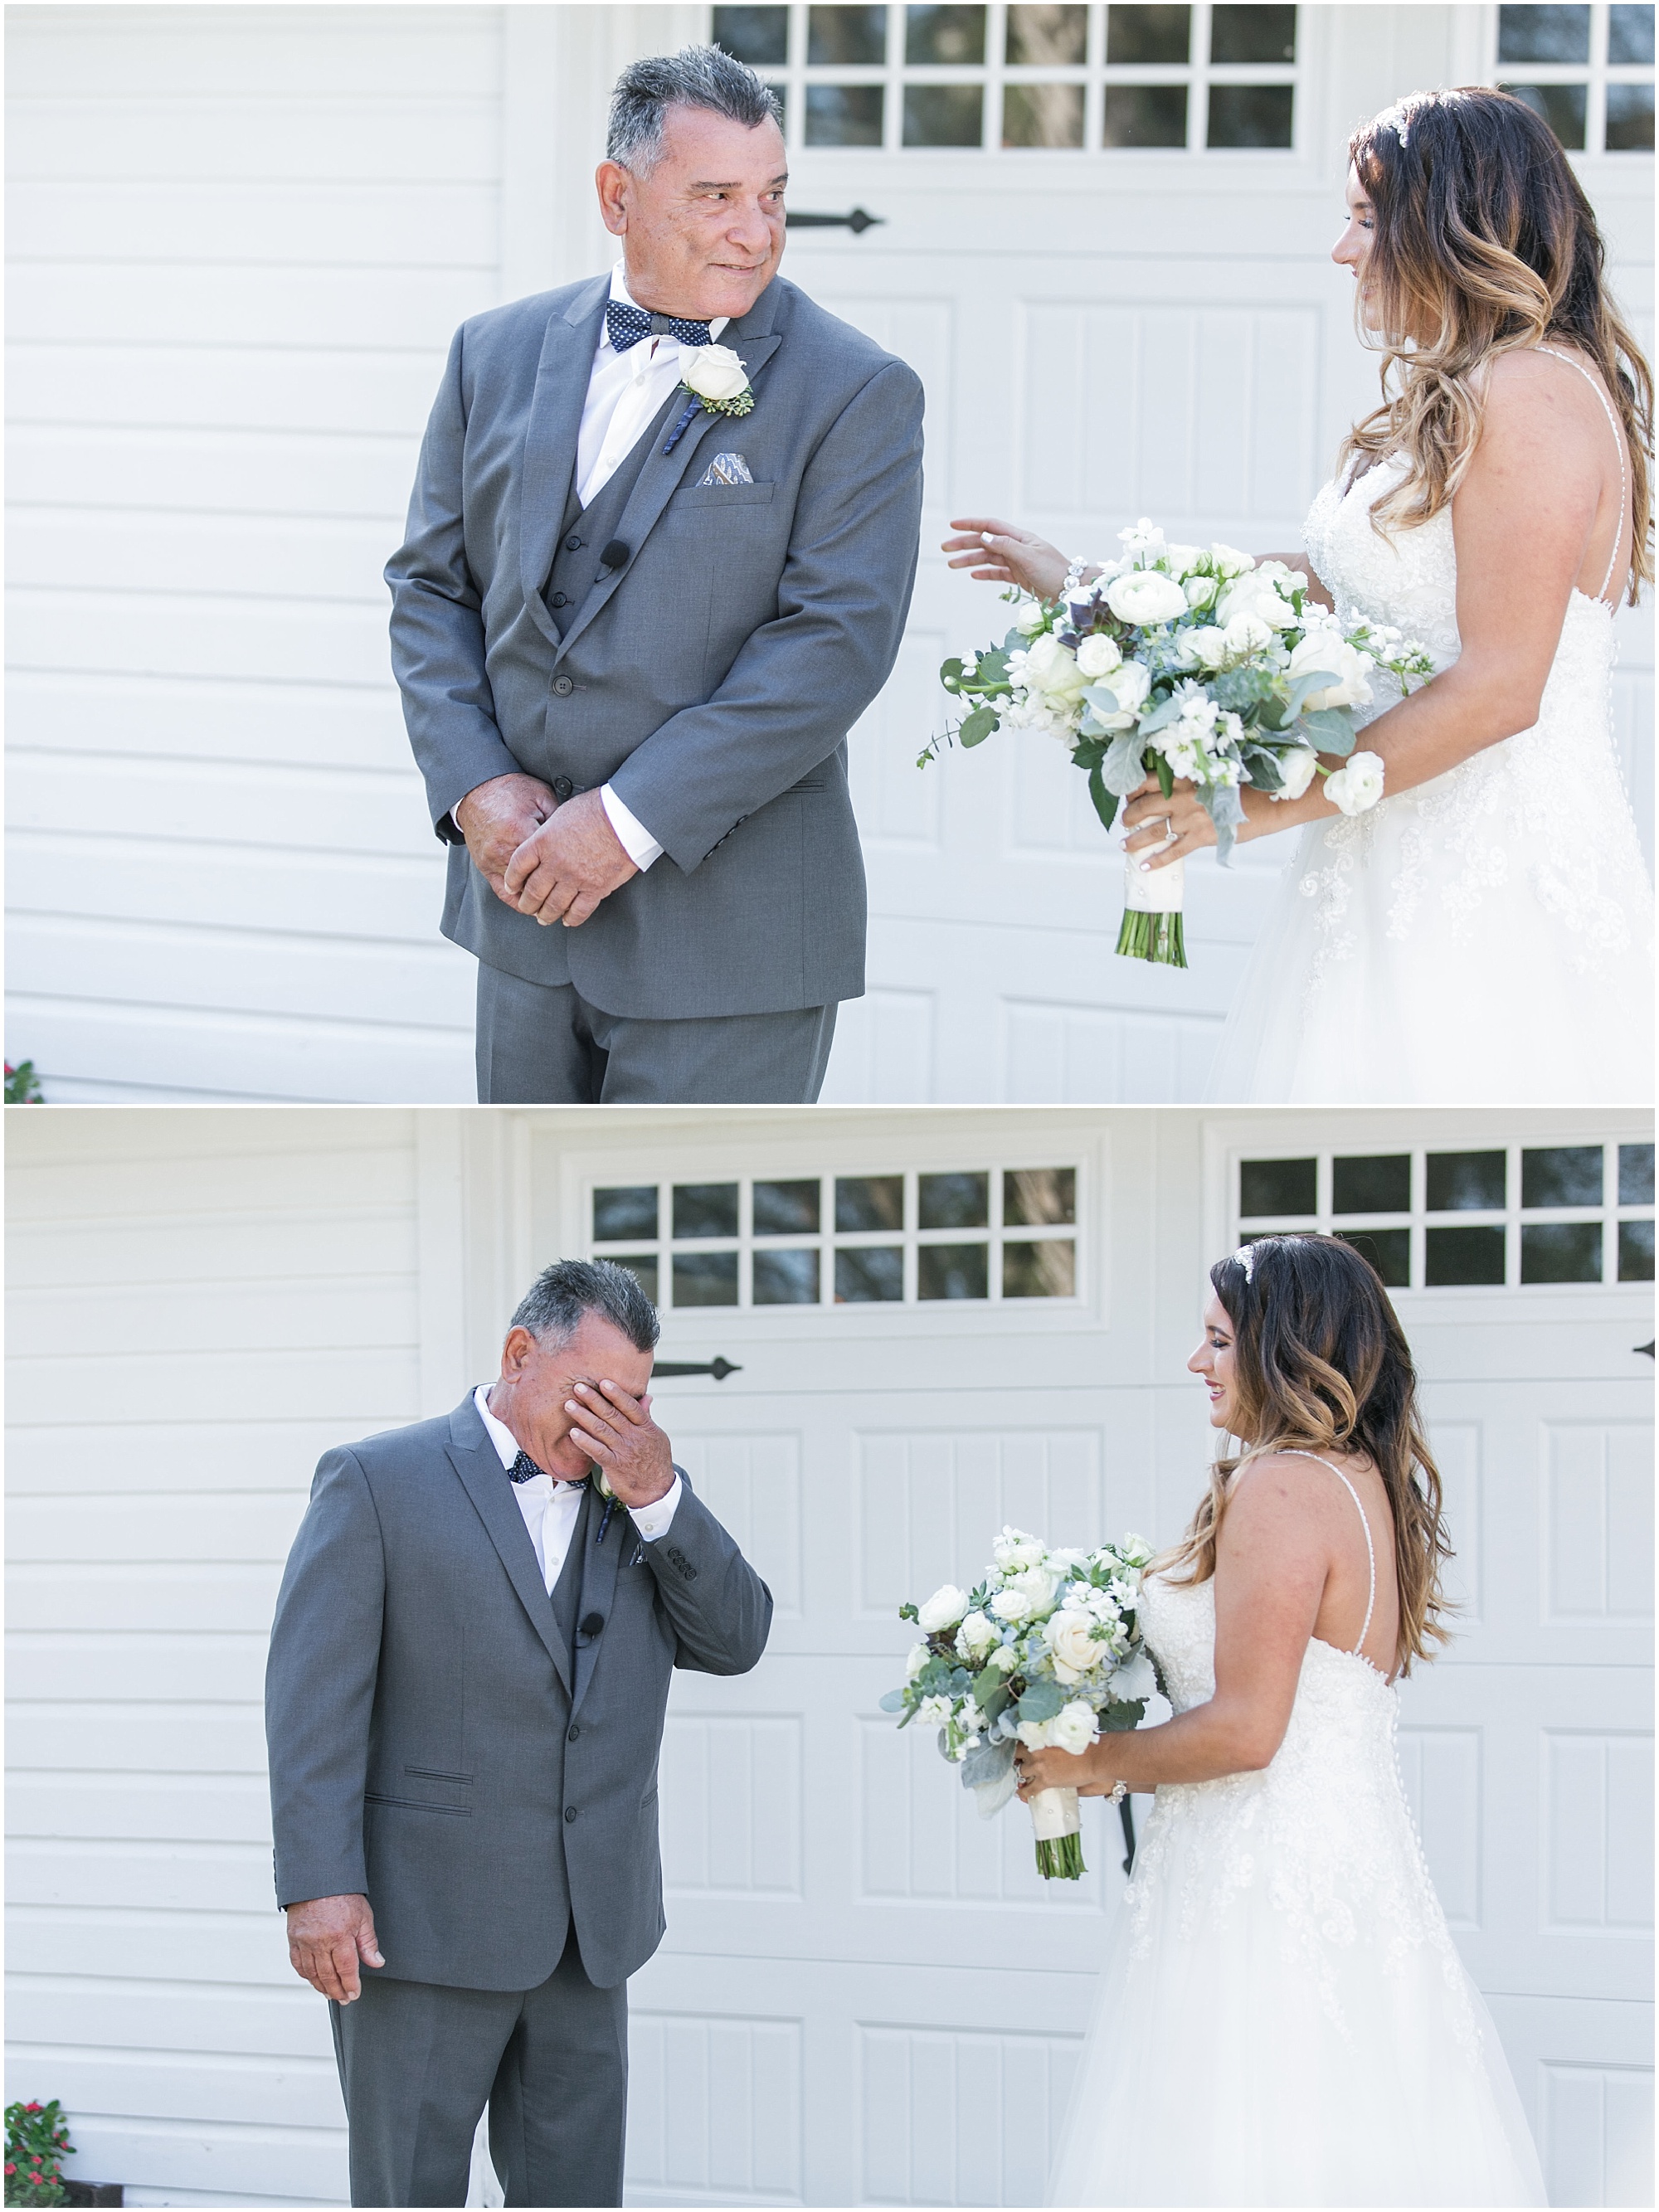 Emotional dad seeing his daughter in her wedding dress